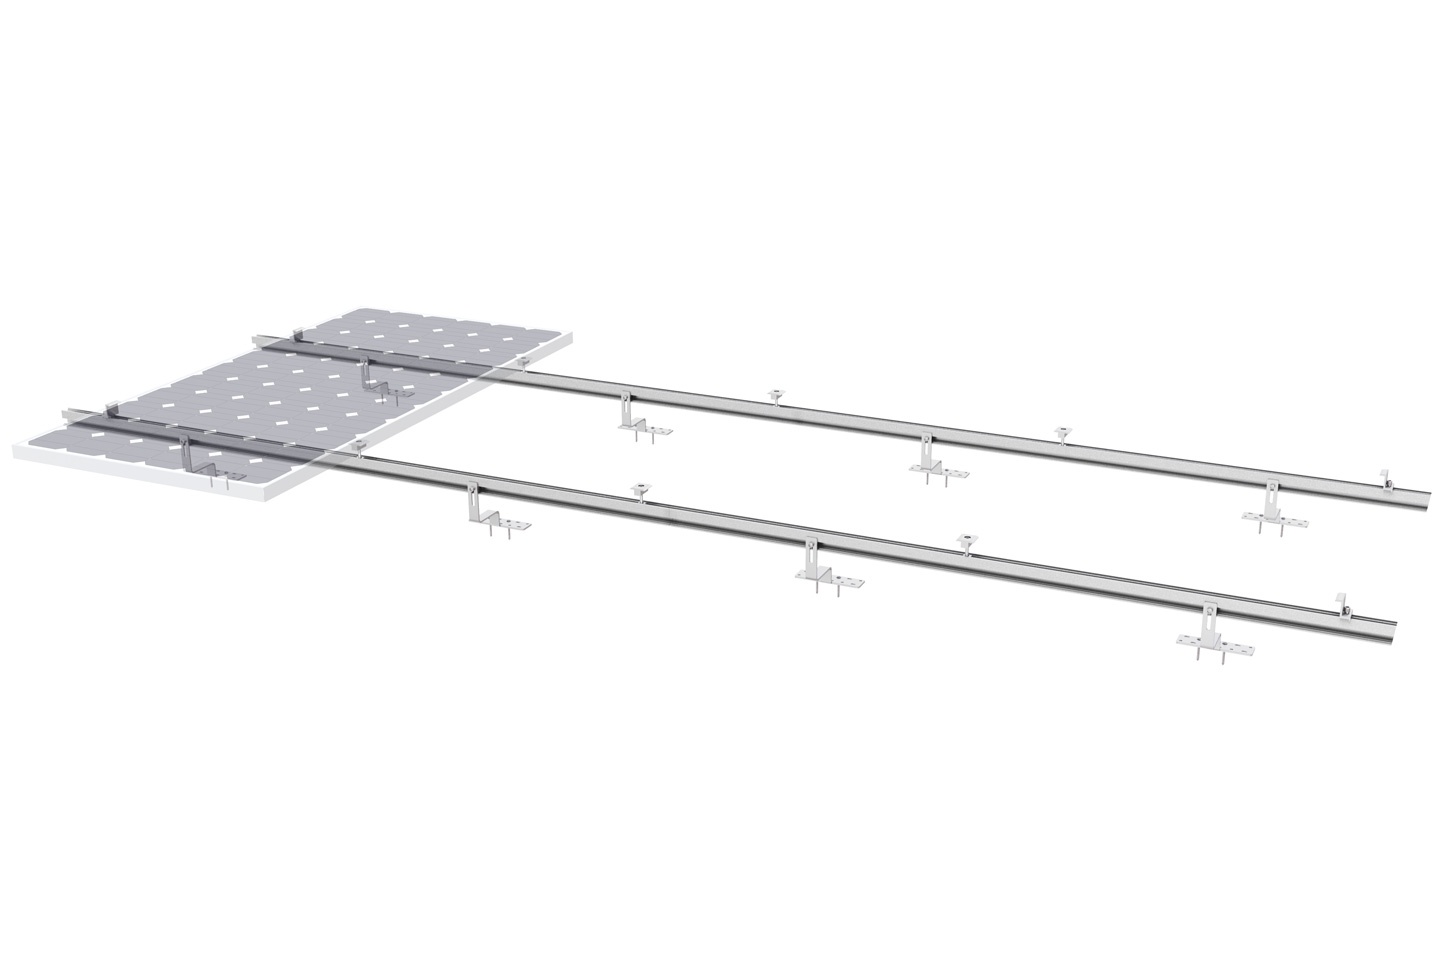 Clenergy ER-I-PRO/01 Tile Roof Clamp Solar PV ezRack Mounting system